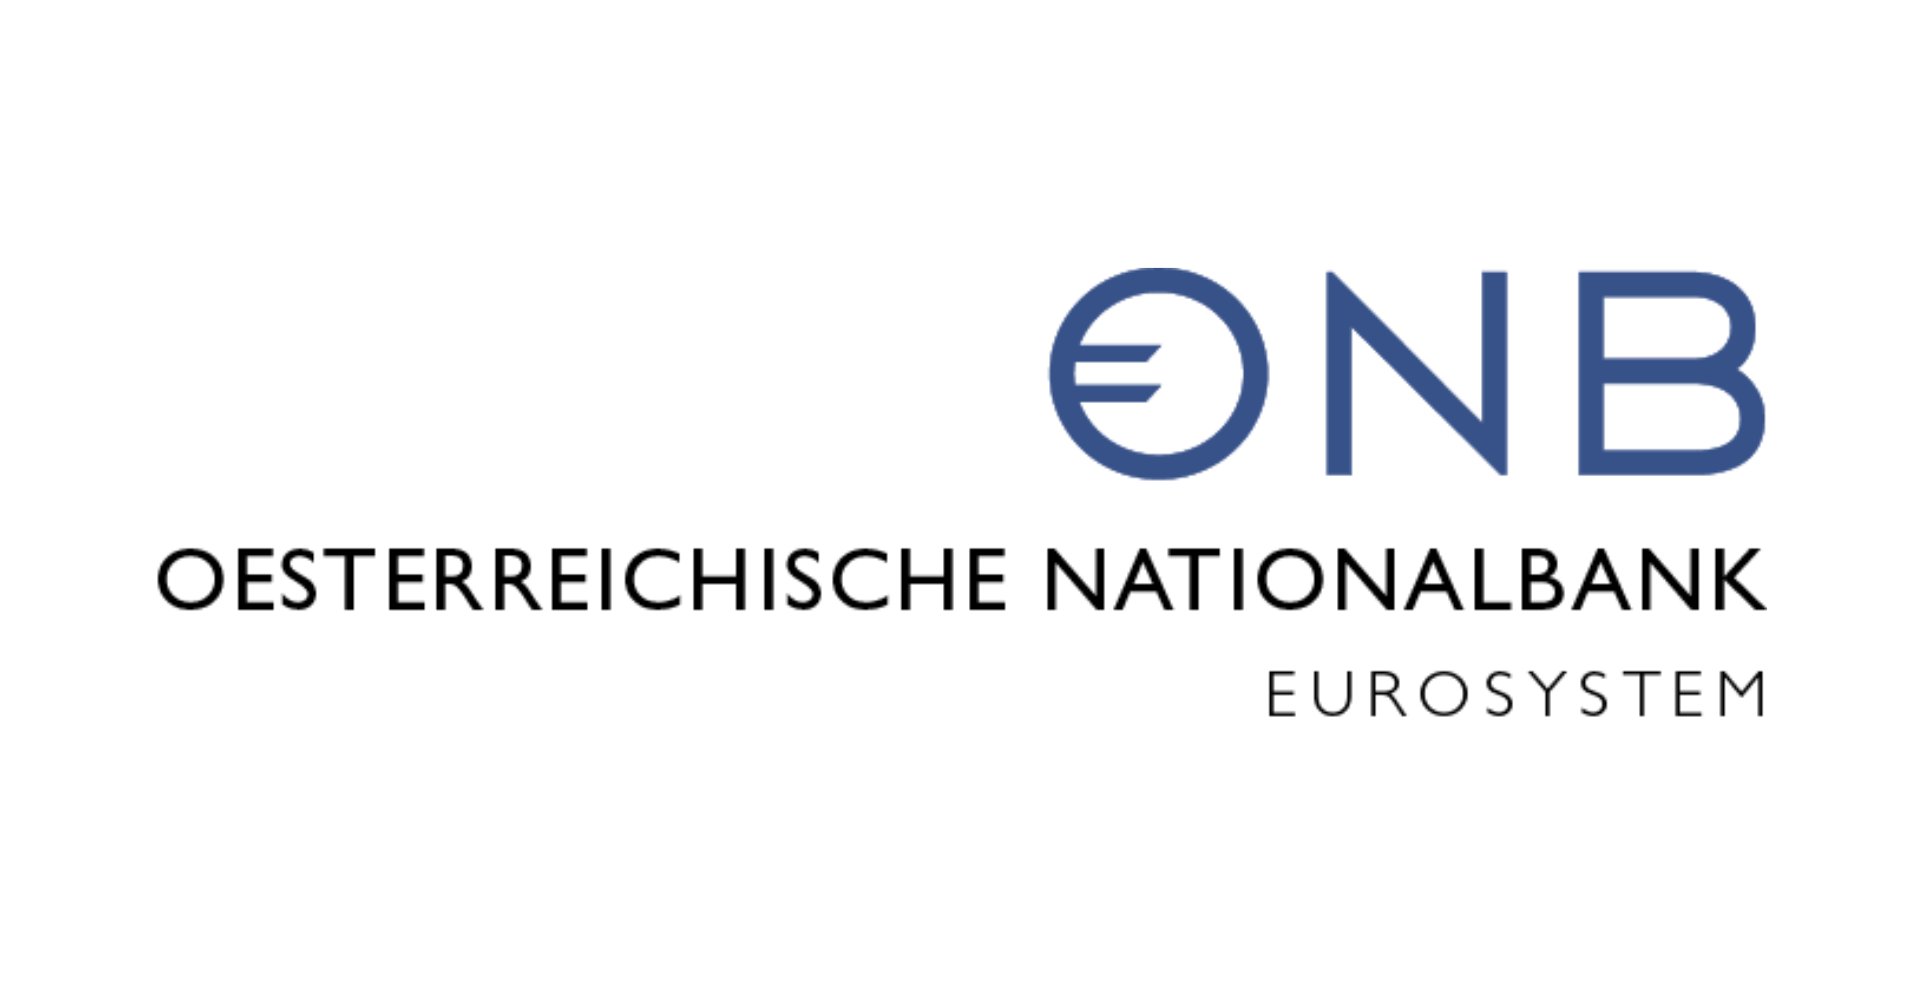 OENB Logo